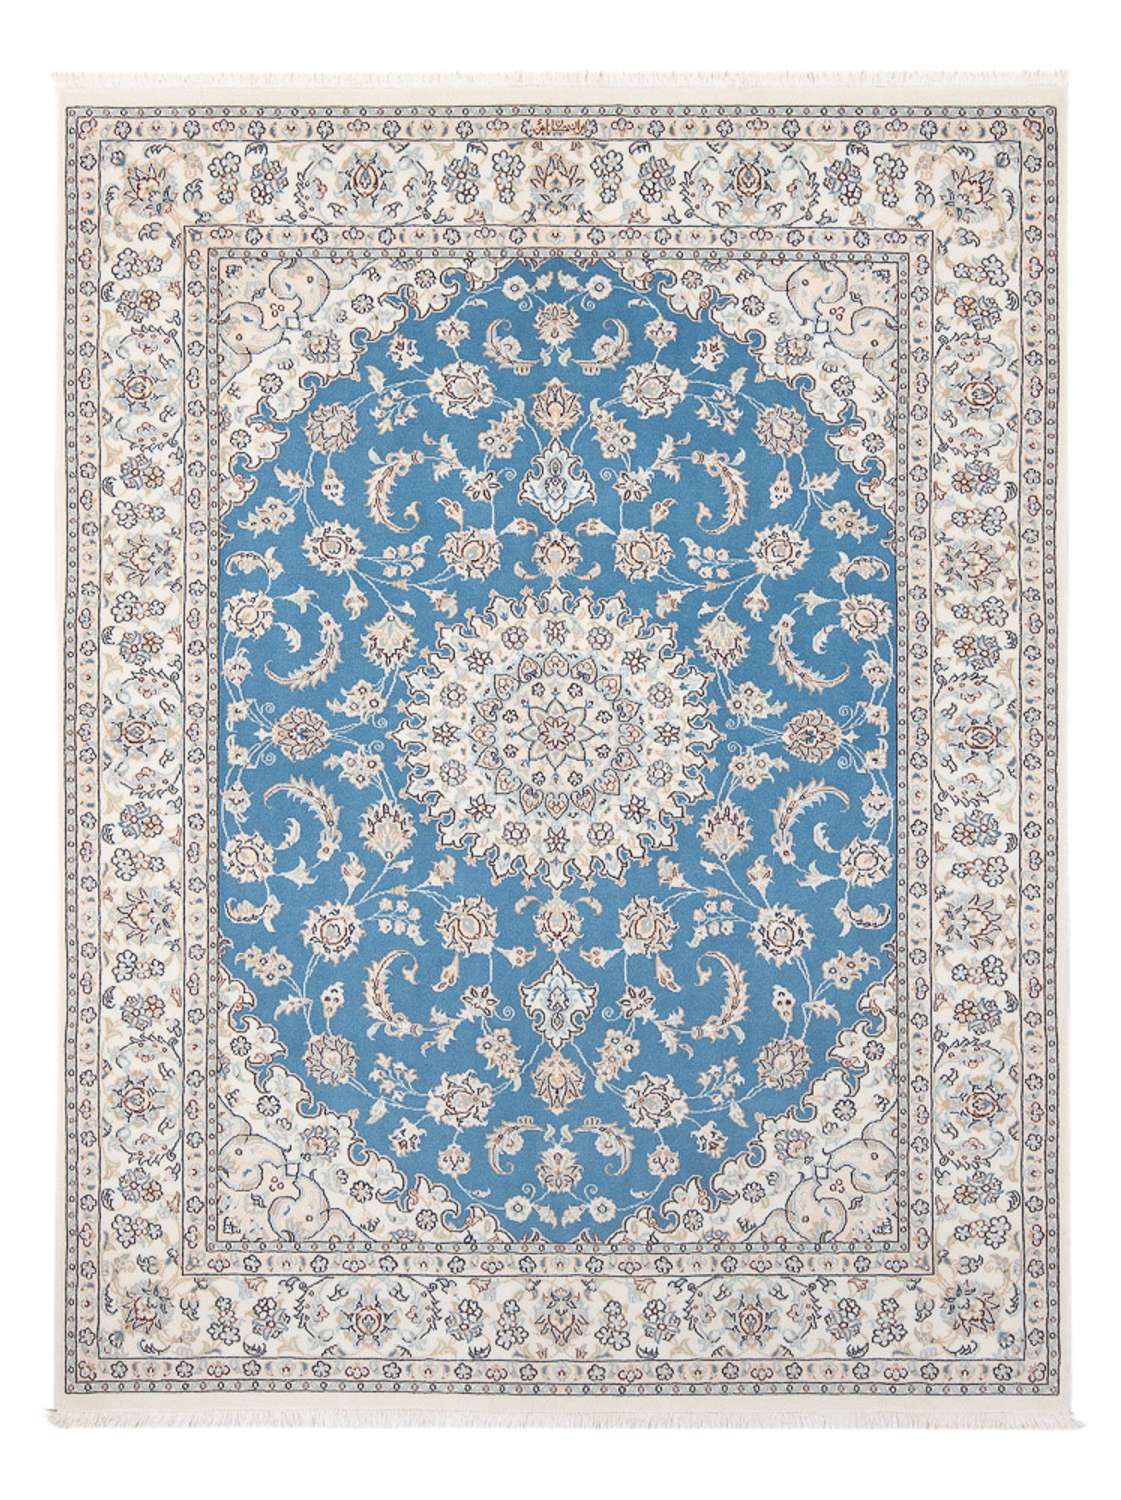 Tapis persan - Nain - Premium - 206 x 147 cm - bleu